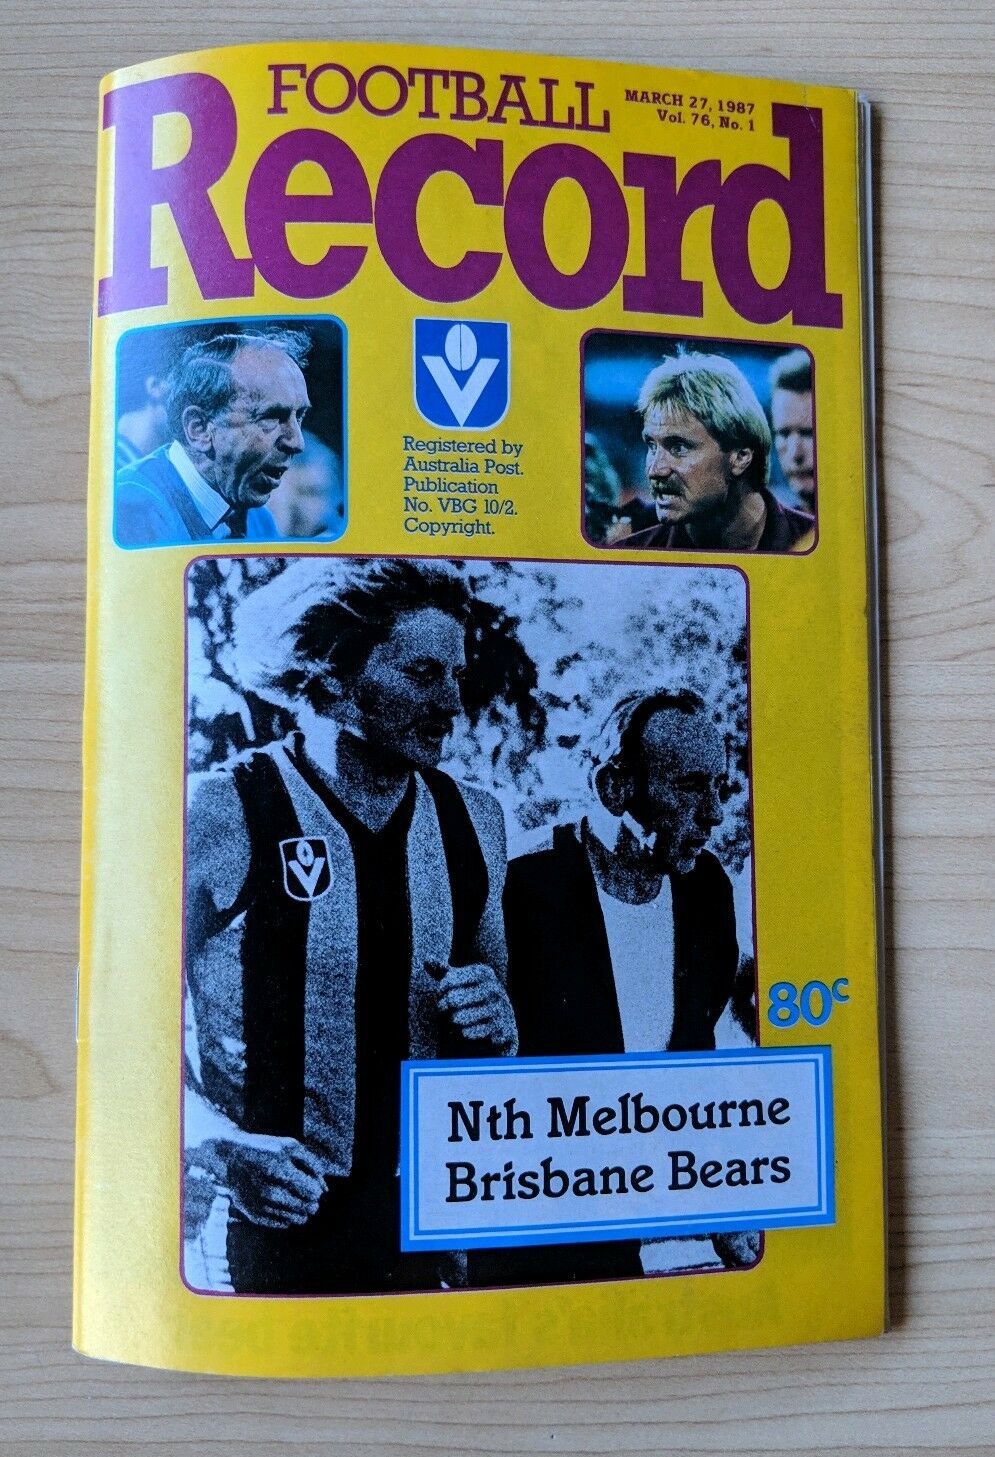 VFL 1987 Football Record Brisbane Bears First Game North Melbourne v Brisbane Bears